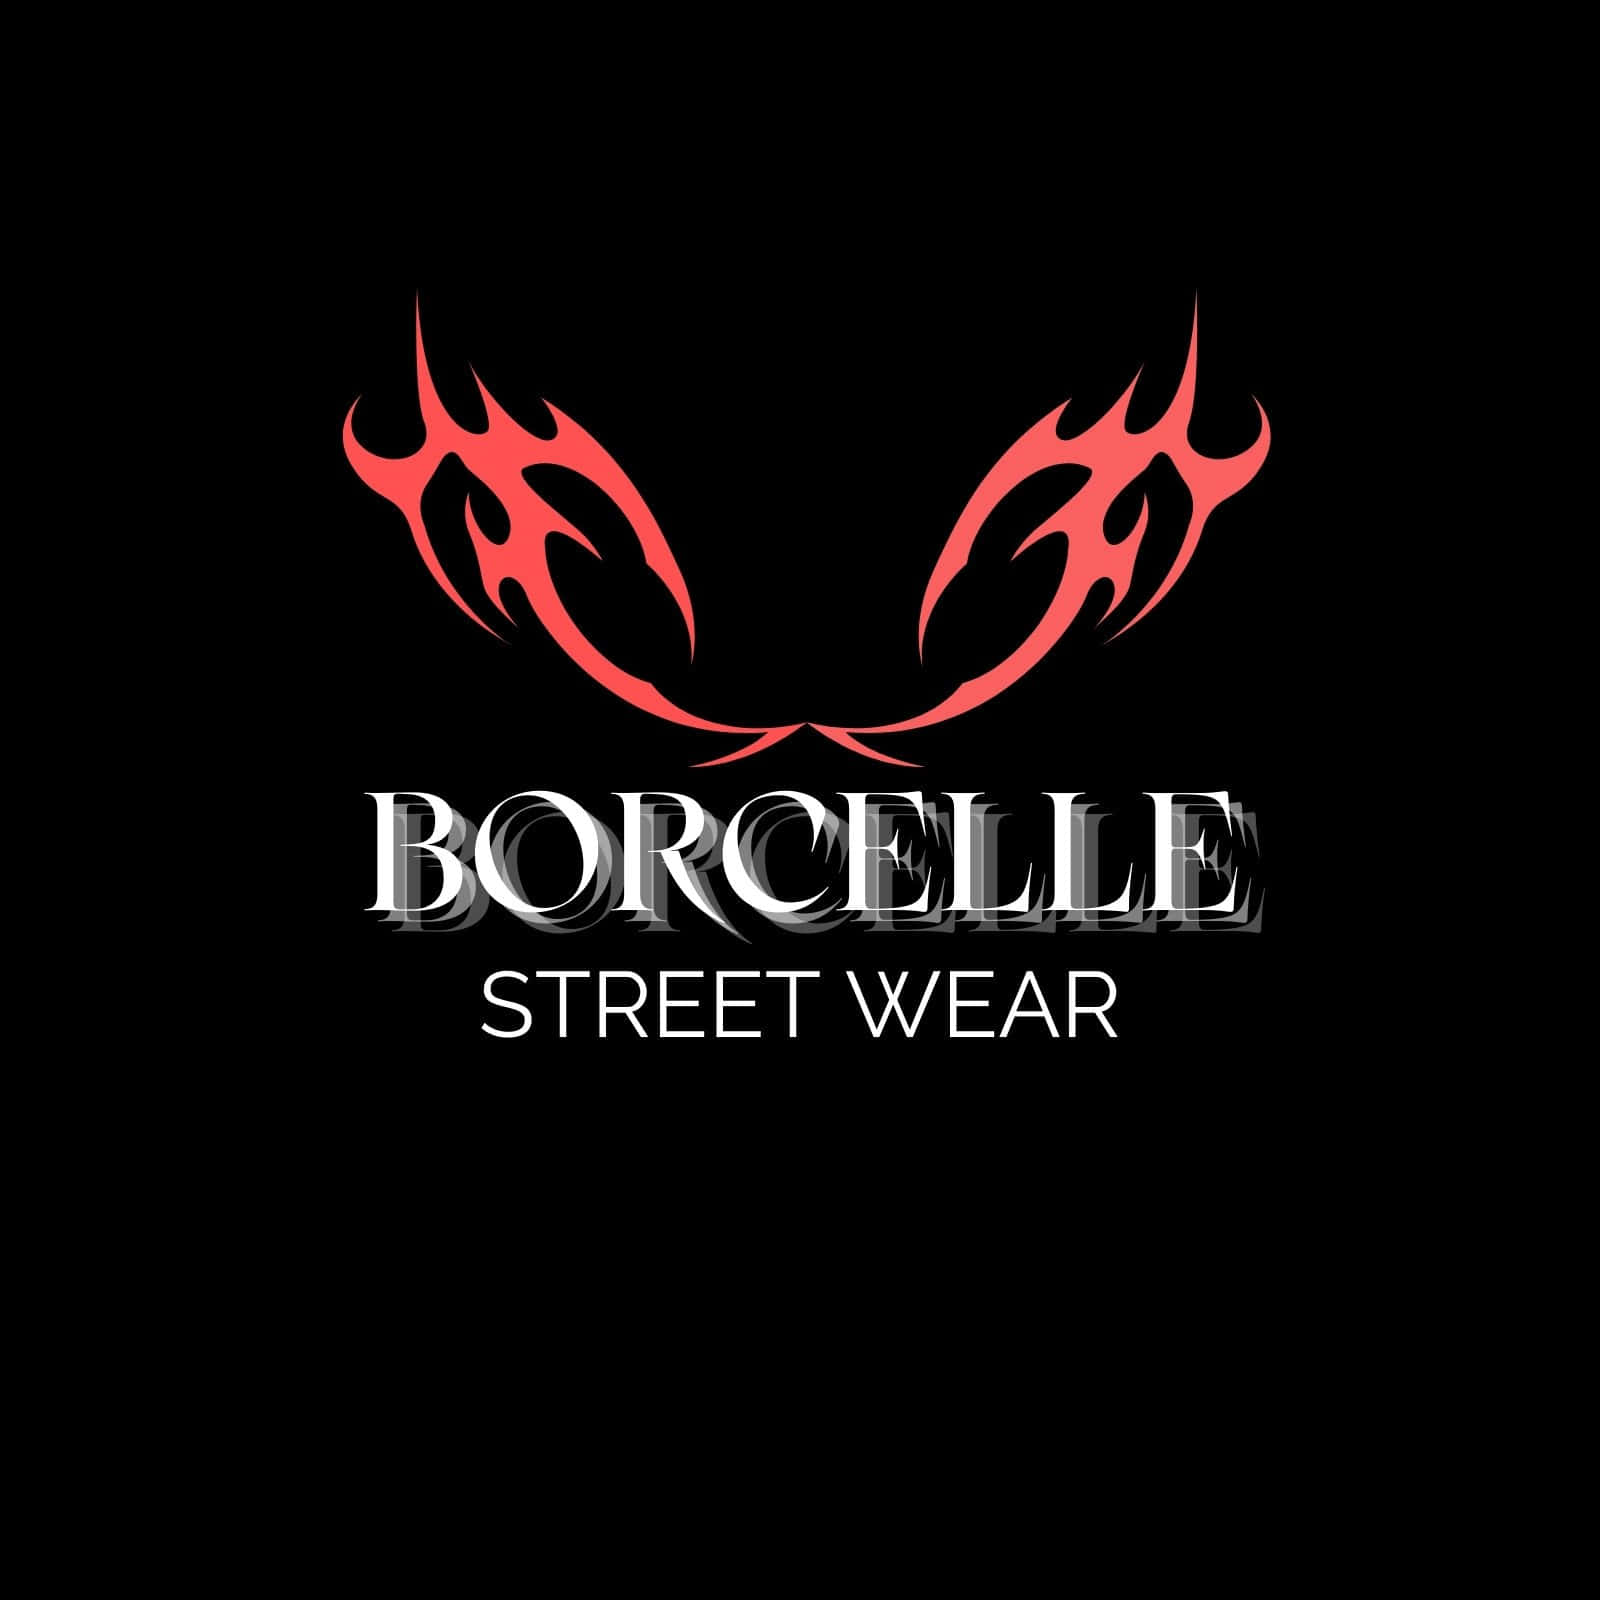 Borcelle Streetwear Logo Flame Design Wallpaper